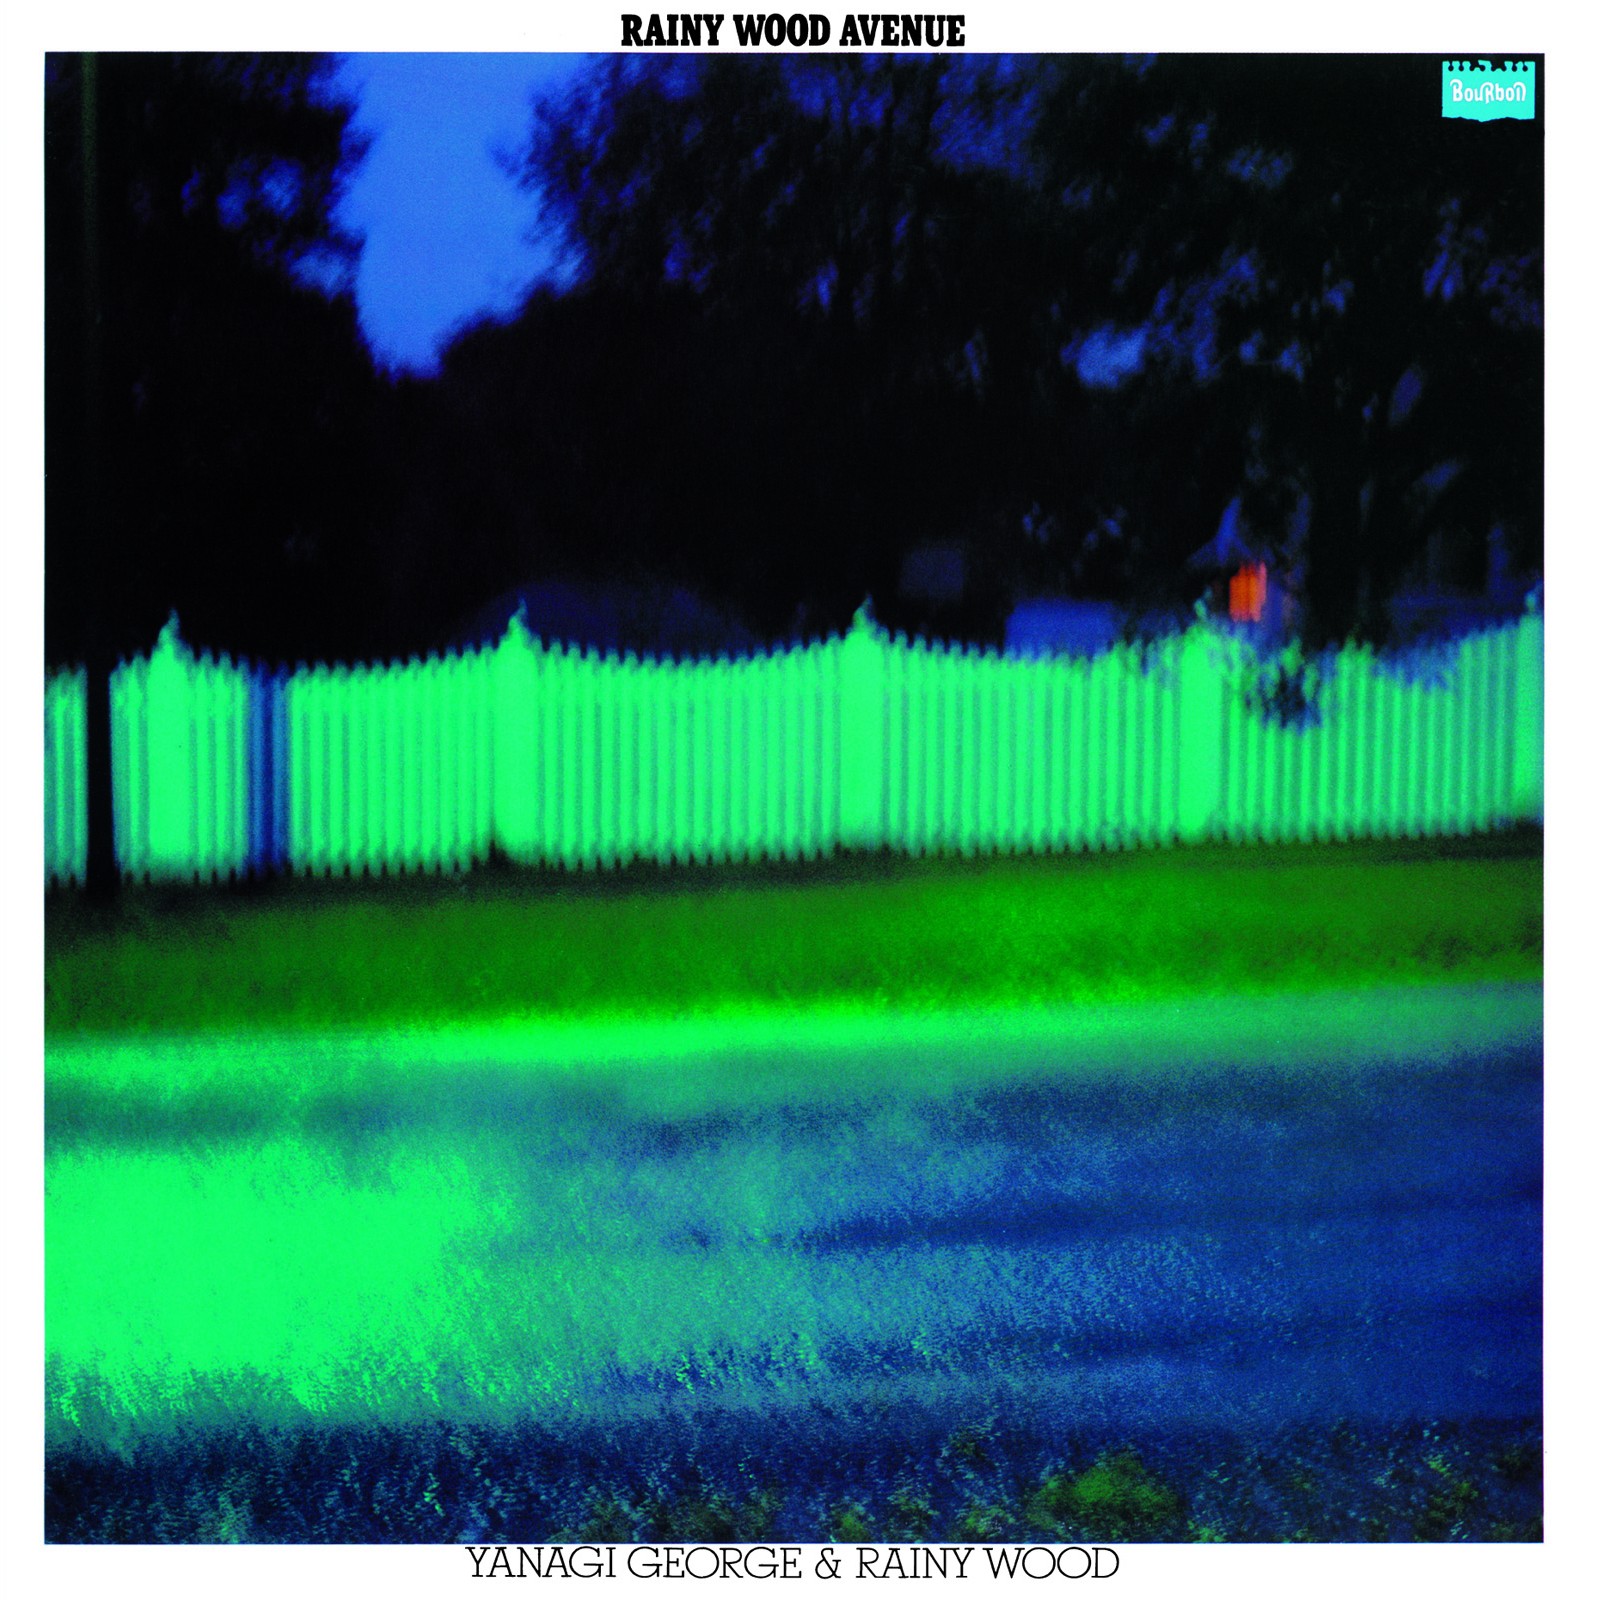 George Yanagi & Rainy Wood (柳ジョージ&レイニーウッド) – Rainy Wood Avenue (Remastered 2015) [FLAC / 24bit Lossless / WEB] [1979.01.01]